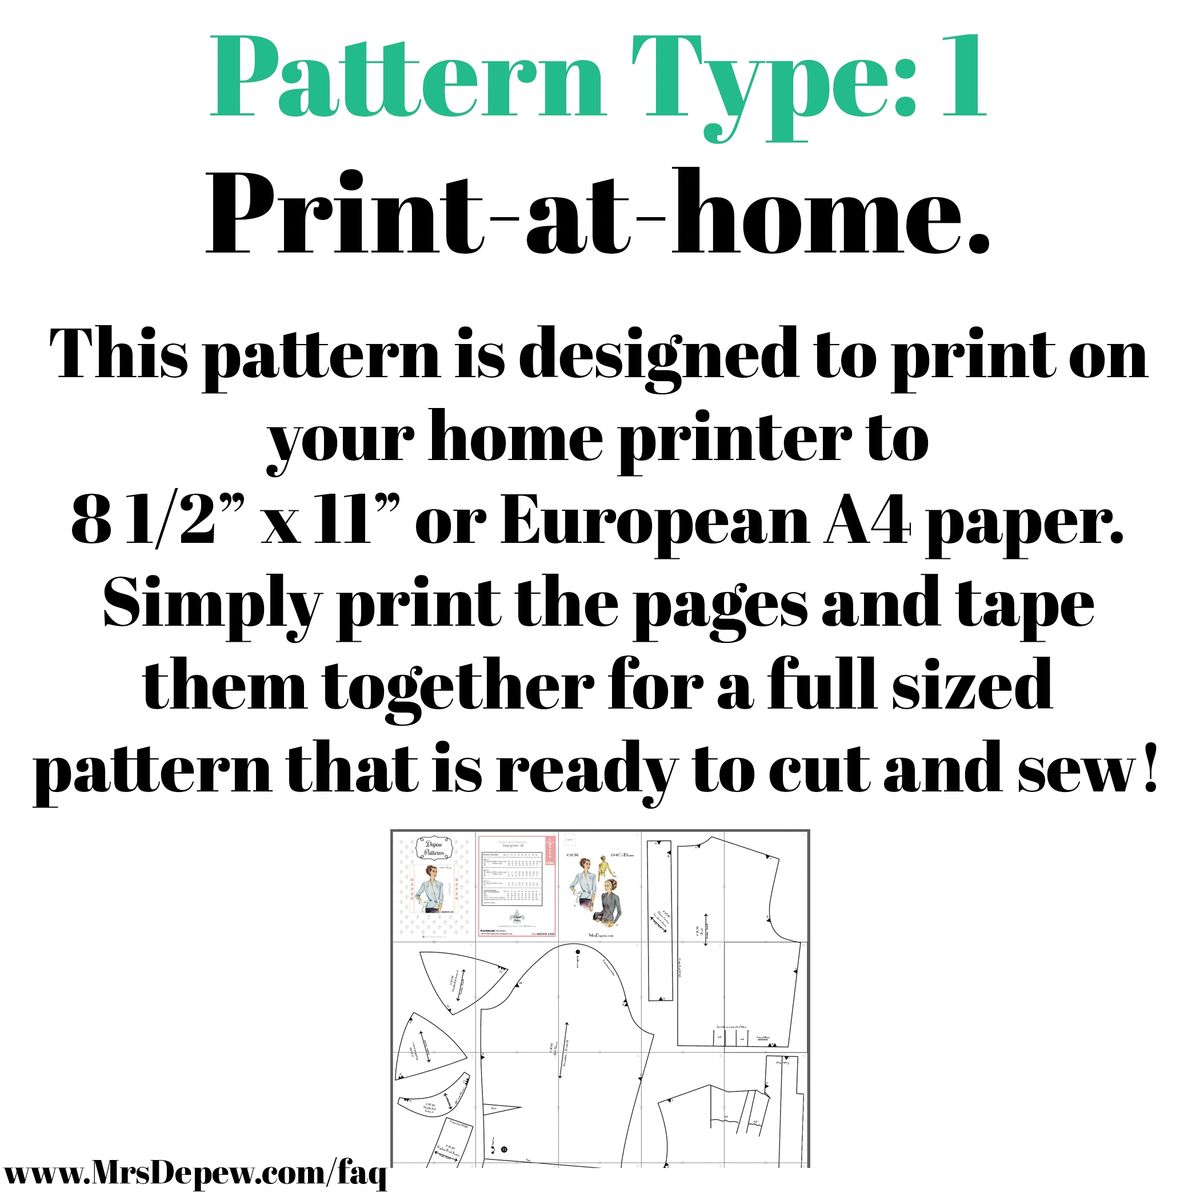 1950's Bullet Bra PDF Sewing Pattern Download